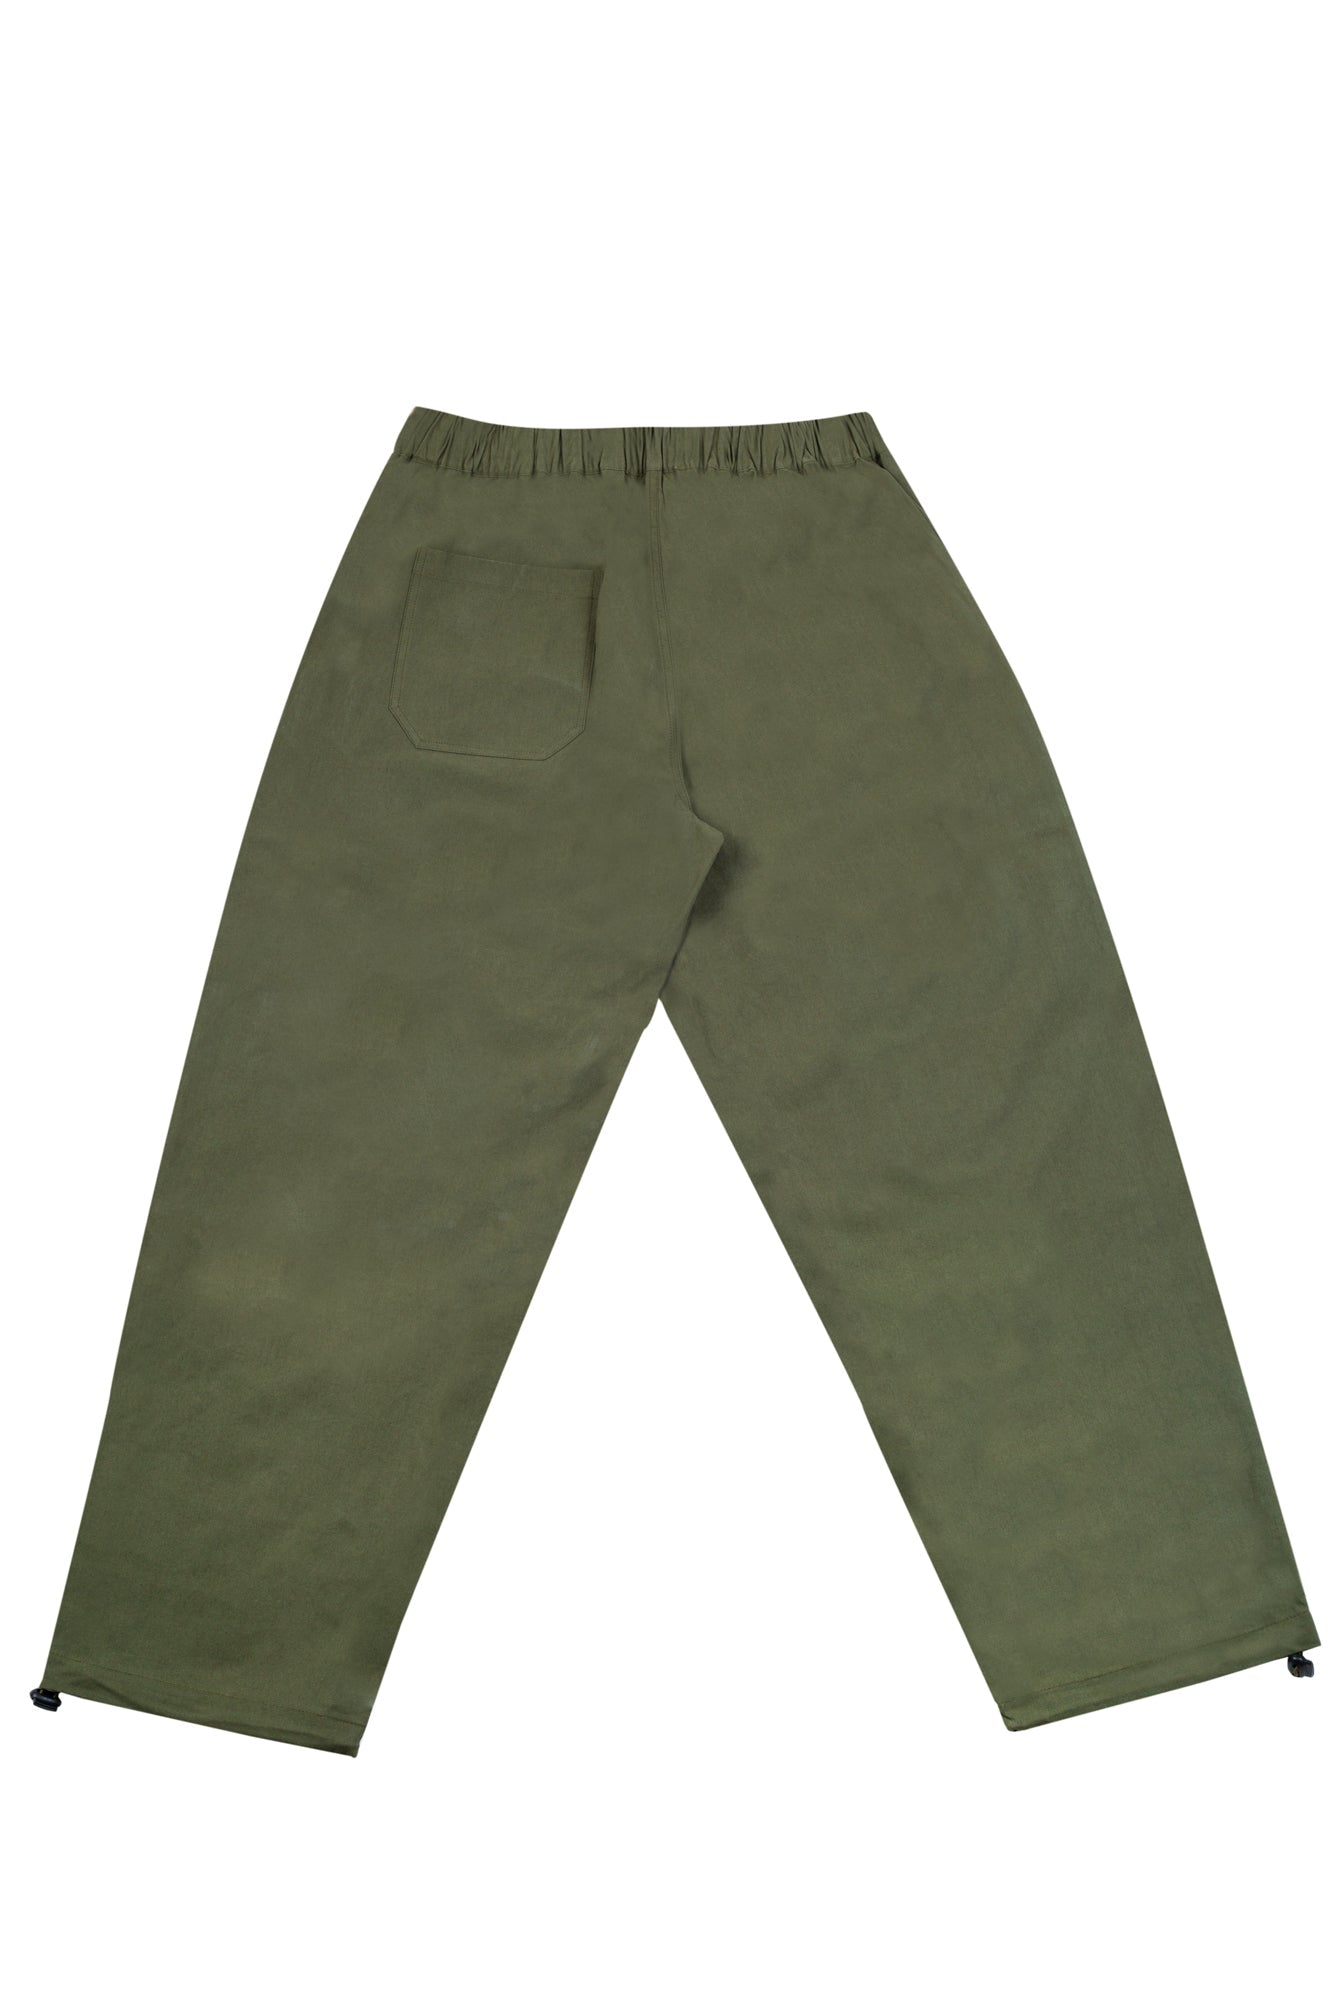 Outdoor Pants (Fern)